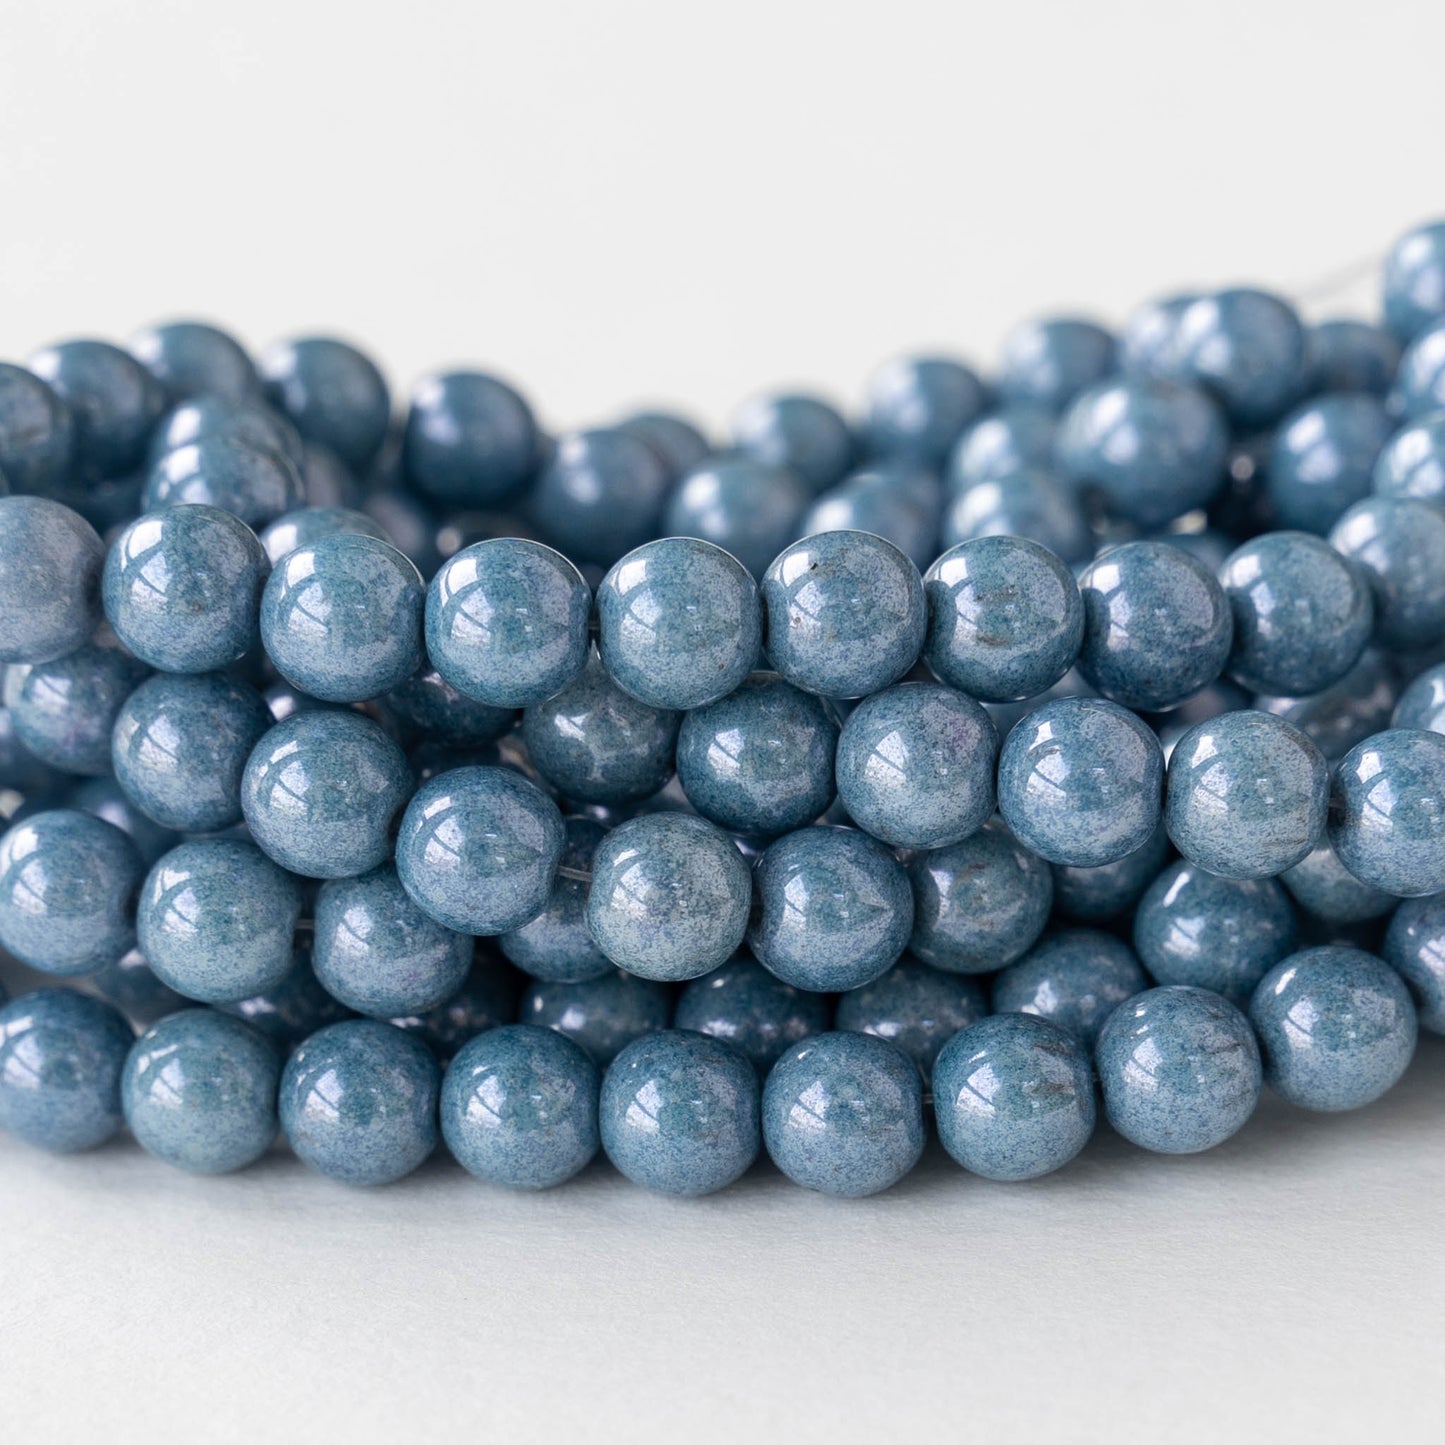 6mm Round Glass Beads - Slate Blue - 25 Beads